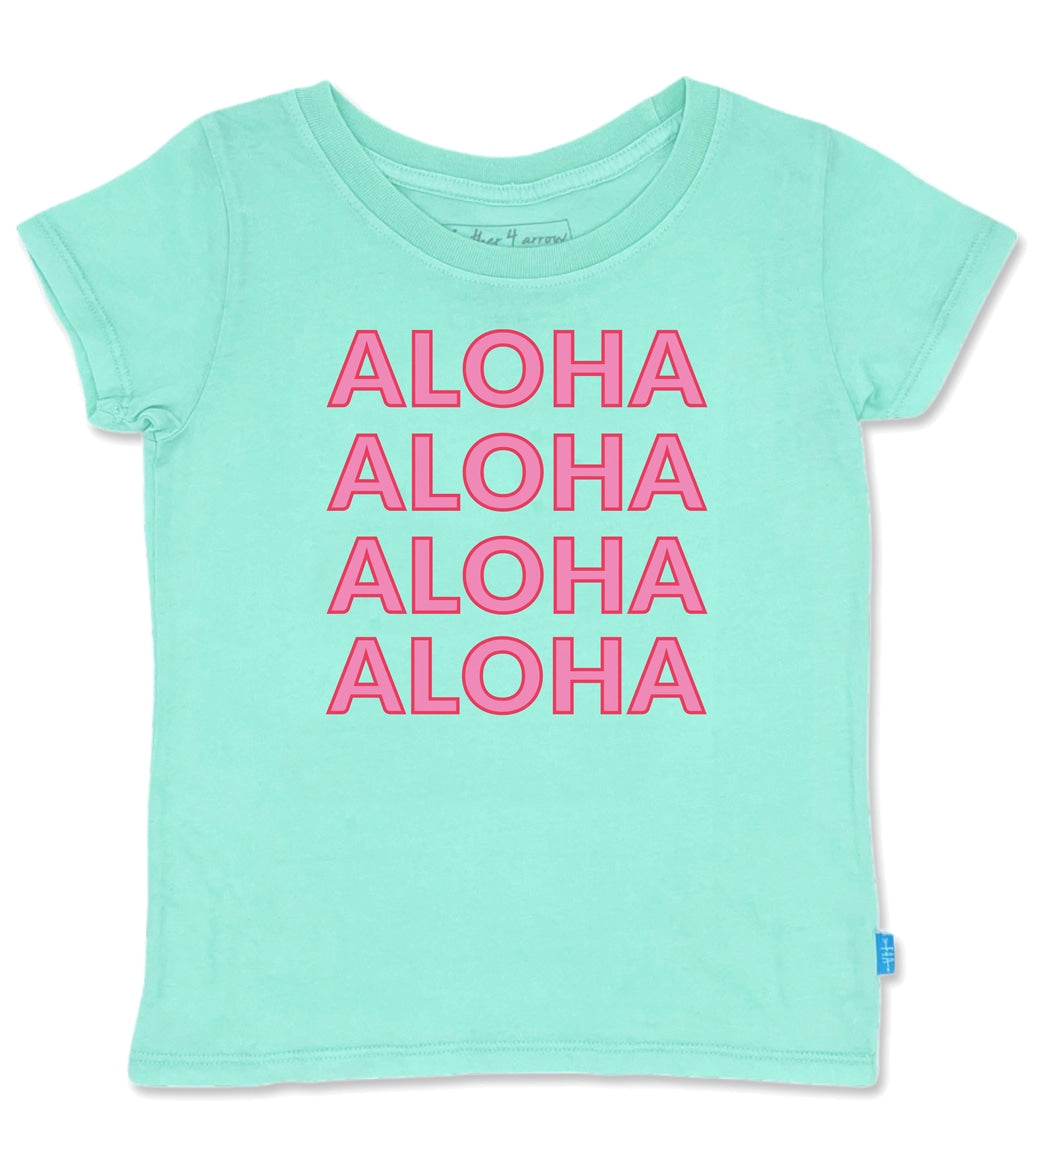 Feather 4 Arrow Girls Aloha All Day Everyday Tee (Baby, Toddler, Little Kid, Big Kid)